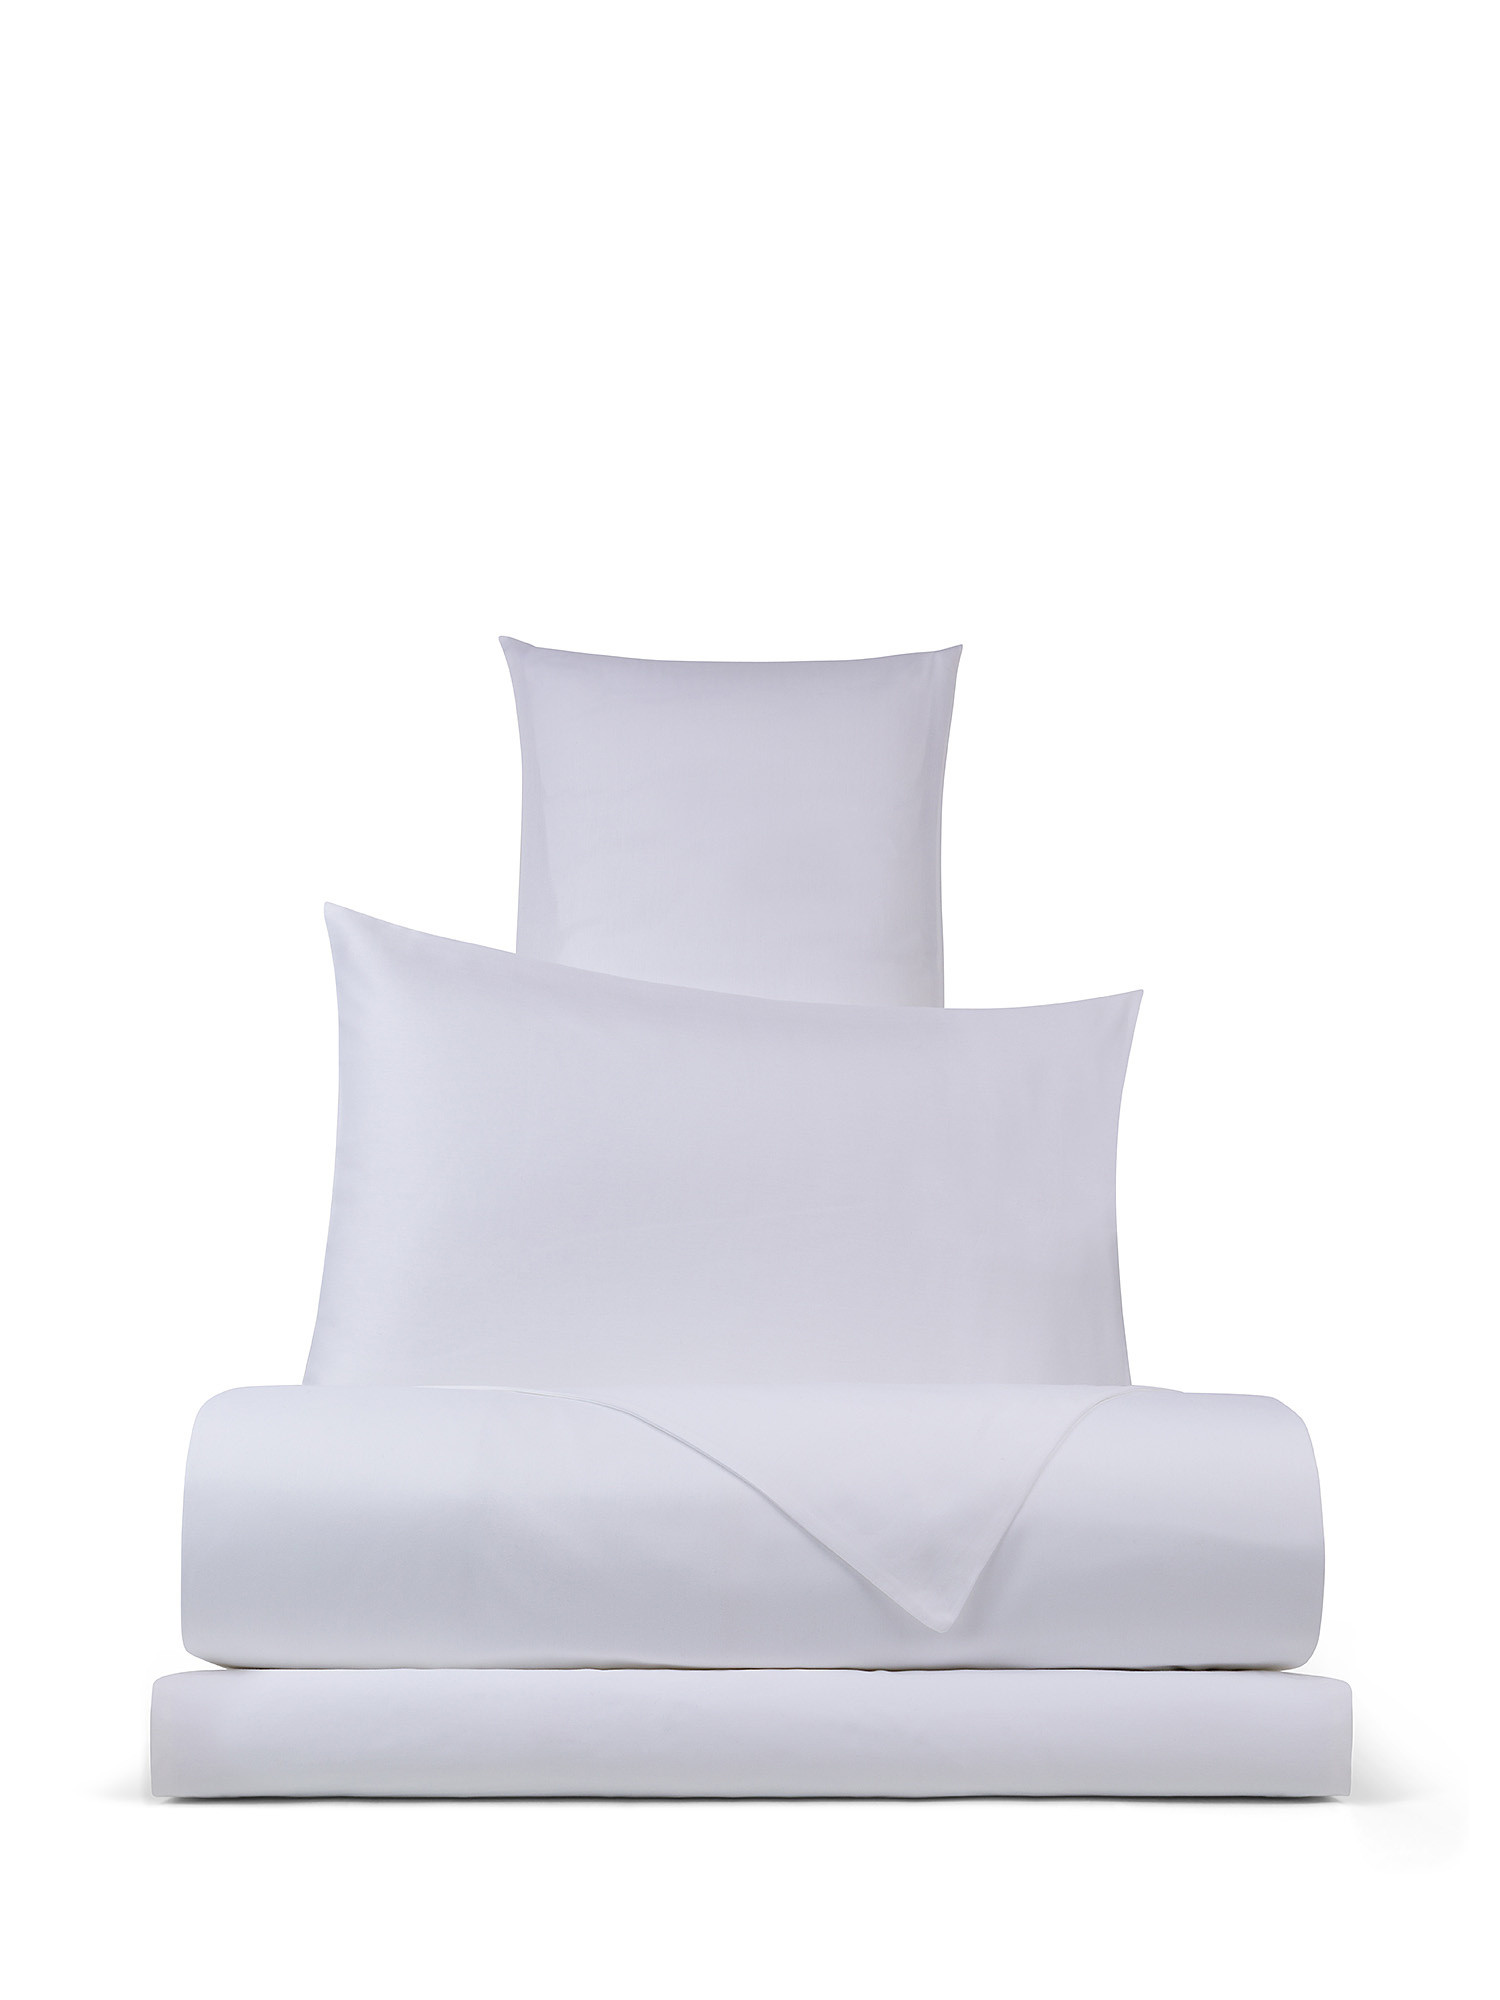 Solid color cotton satin duvet cover set, White, large image number 0